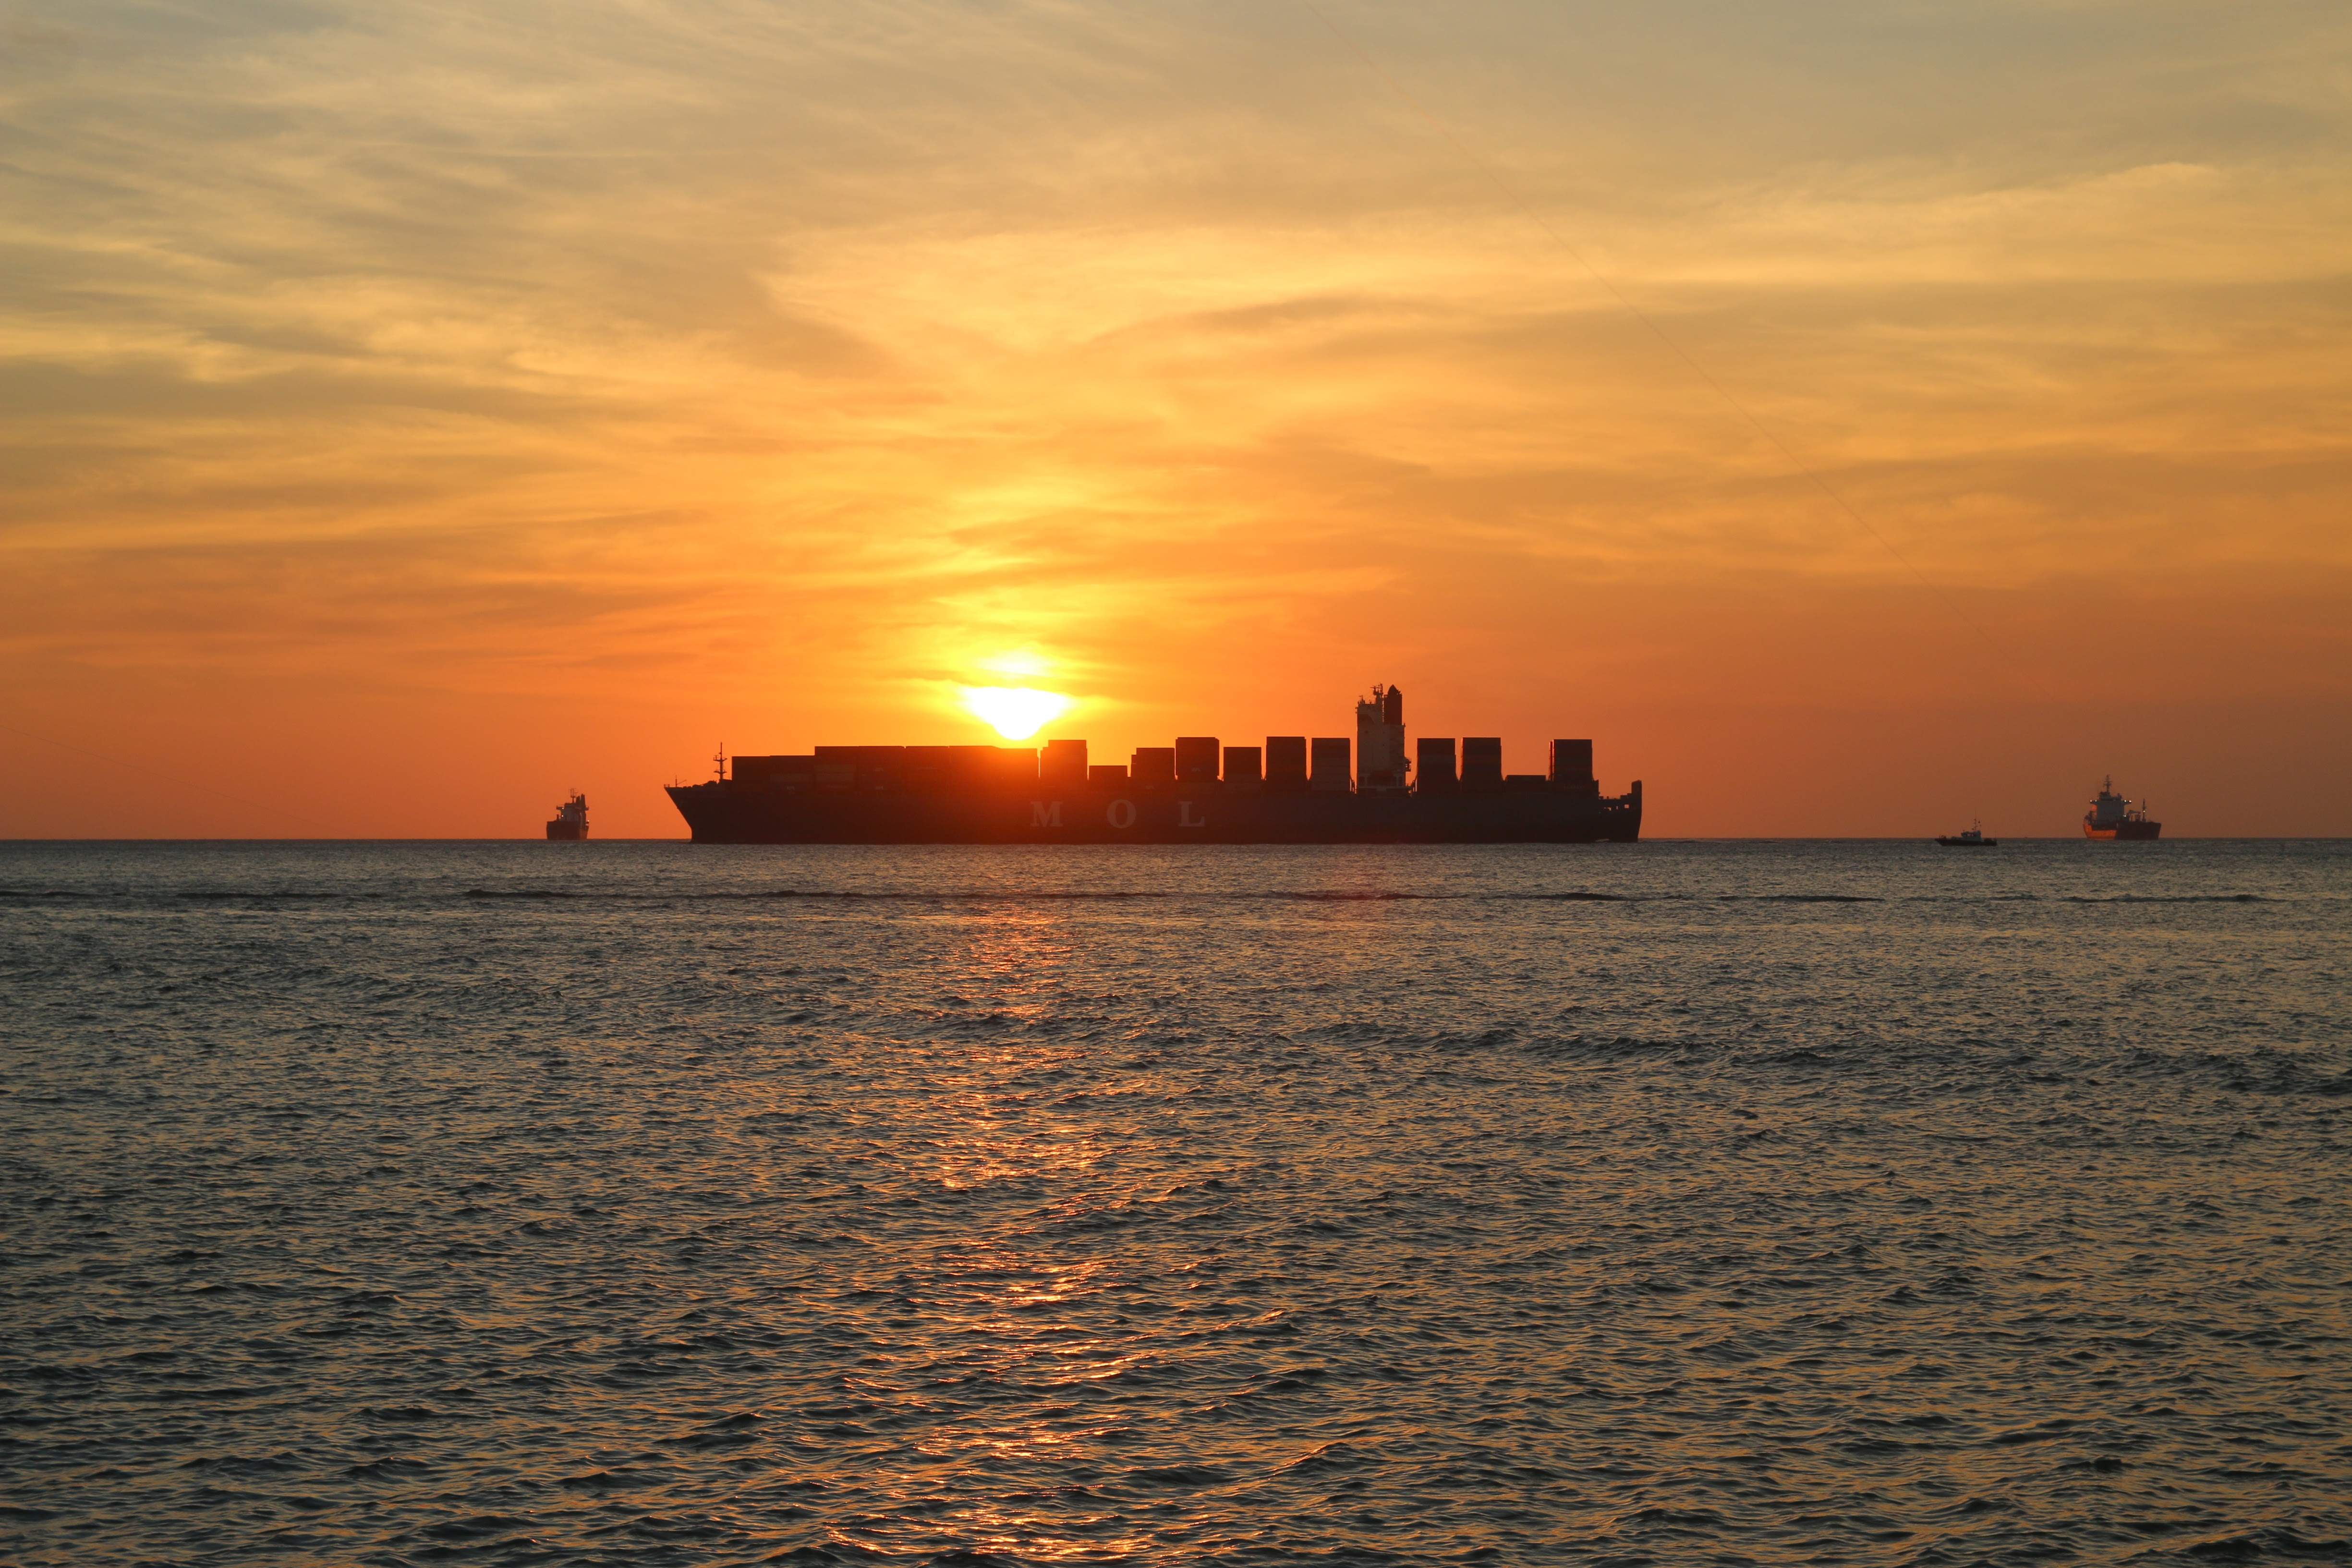 What Helps Ocean Freight Rates; Alliances or Economics?